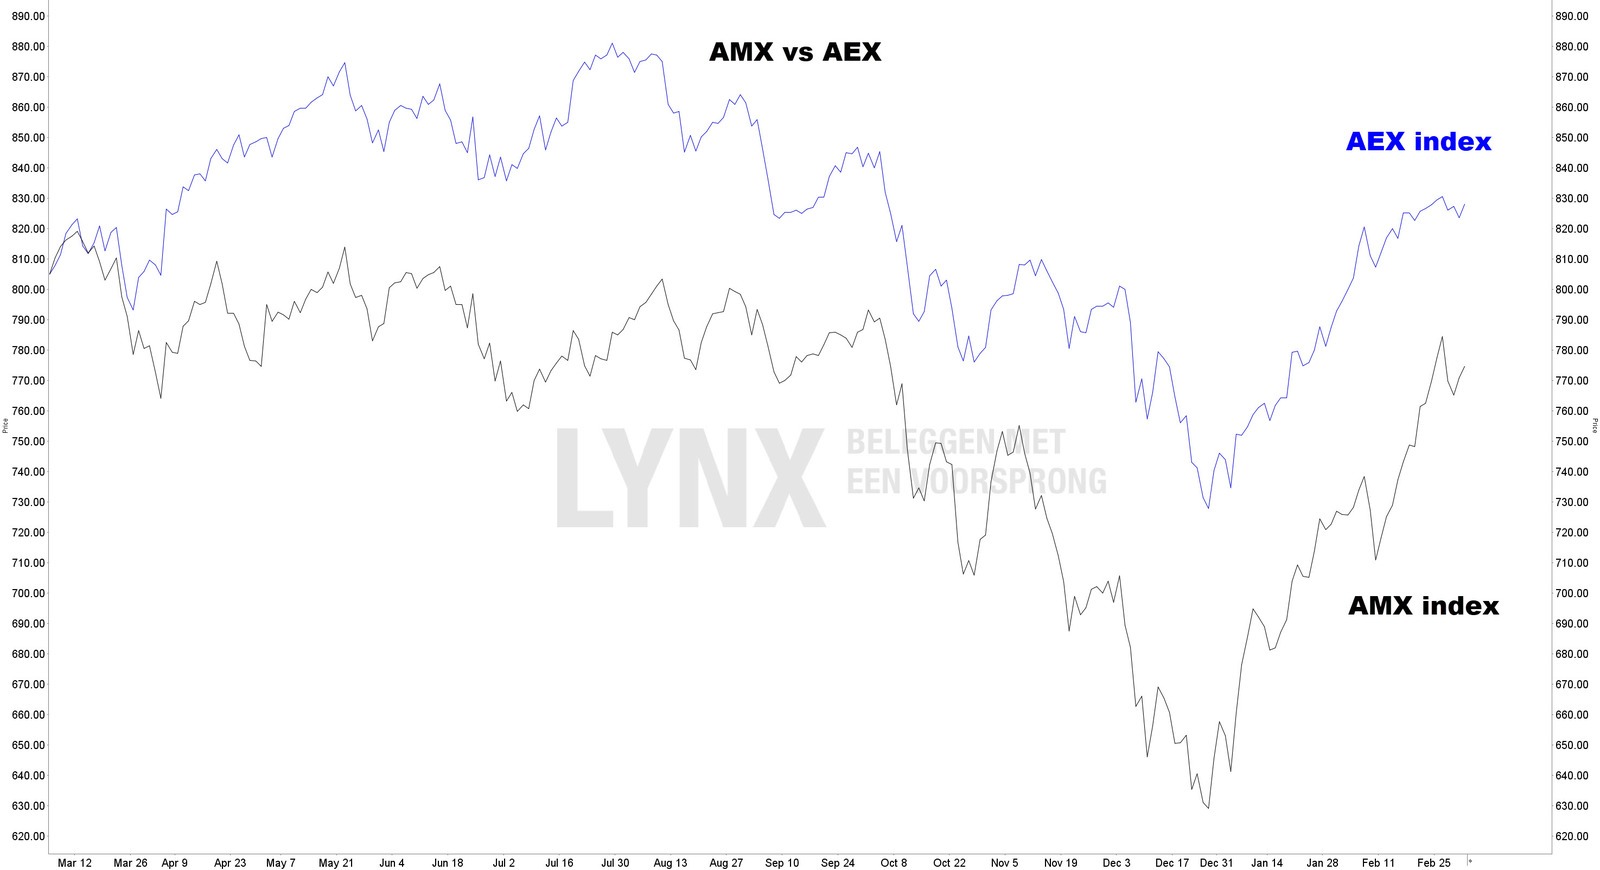 koers AMX index vs AEX index